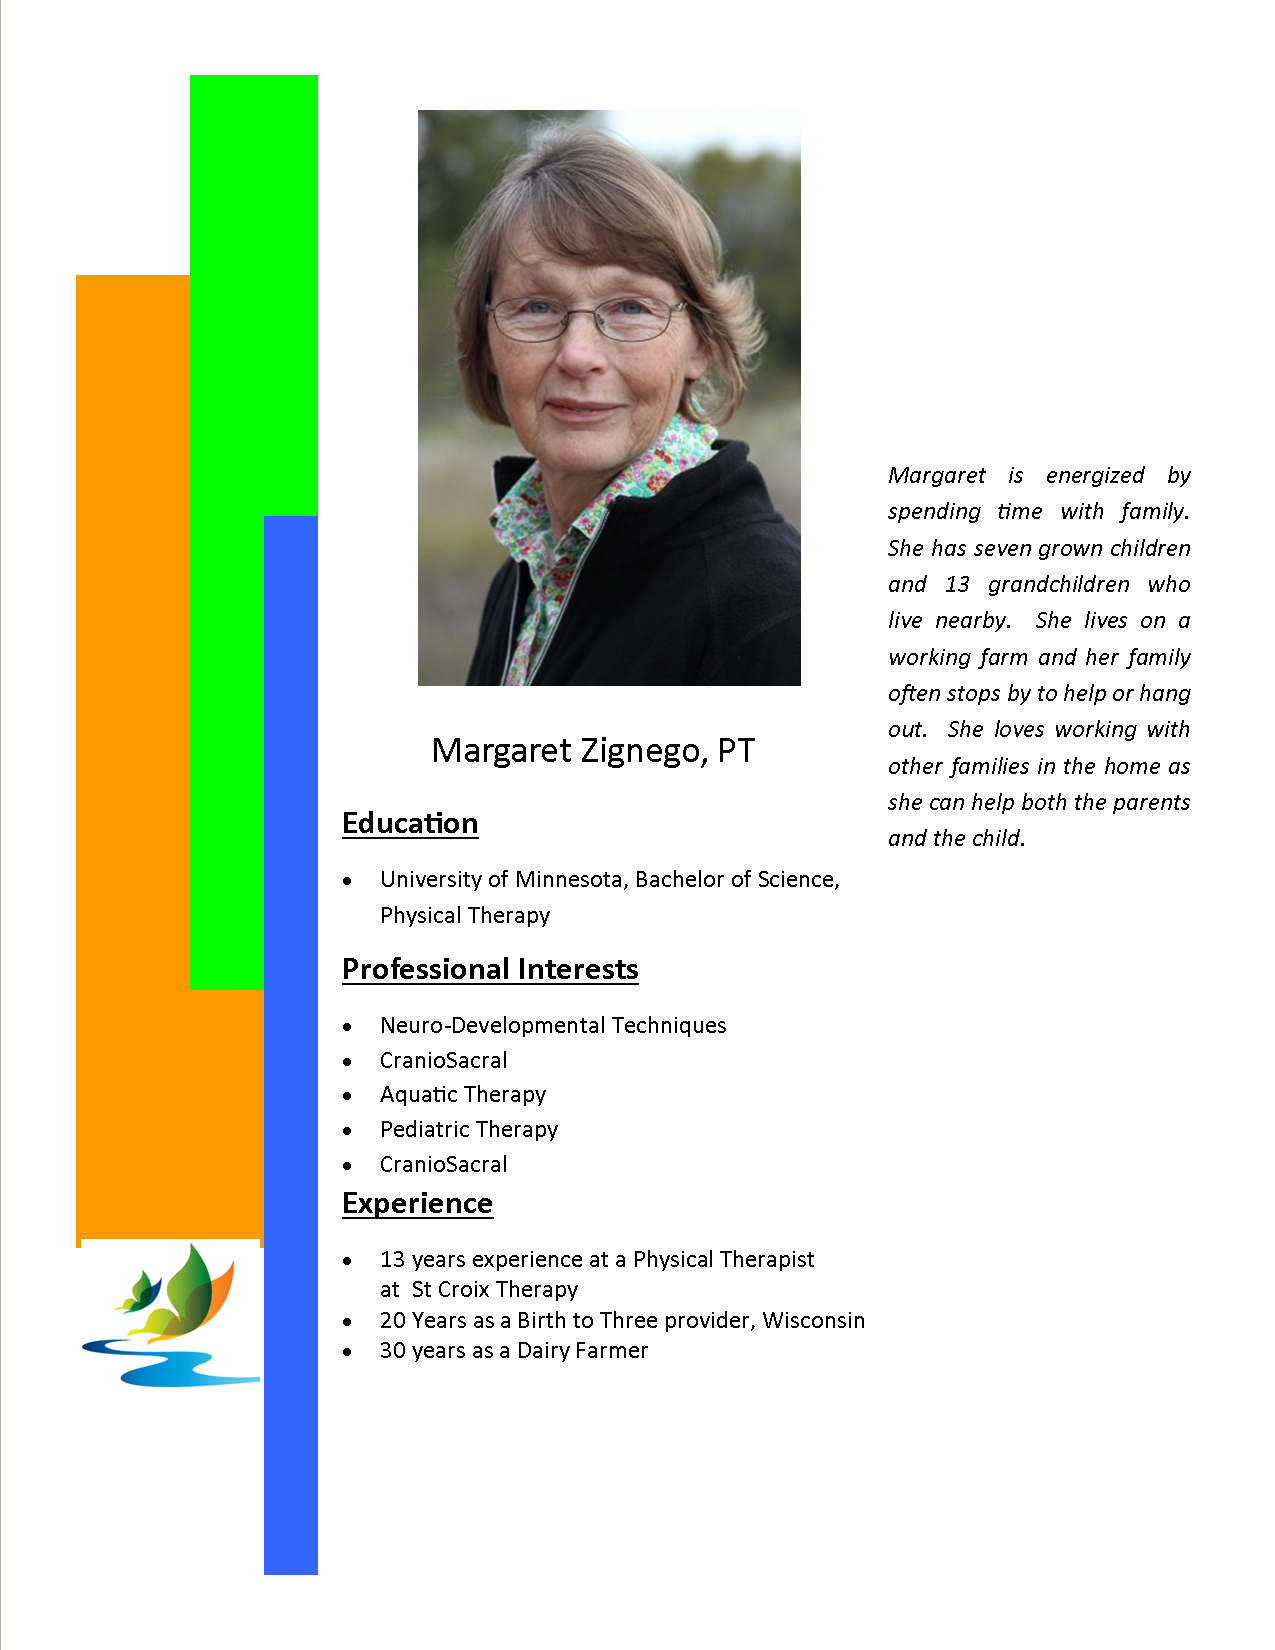 Margaret_Zignego-7-24-14